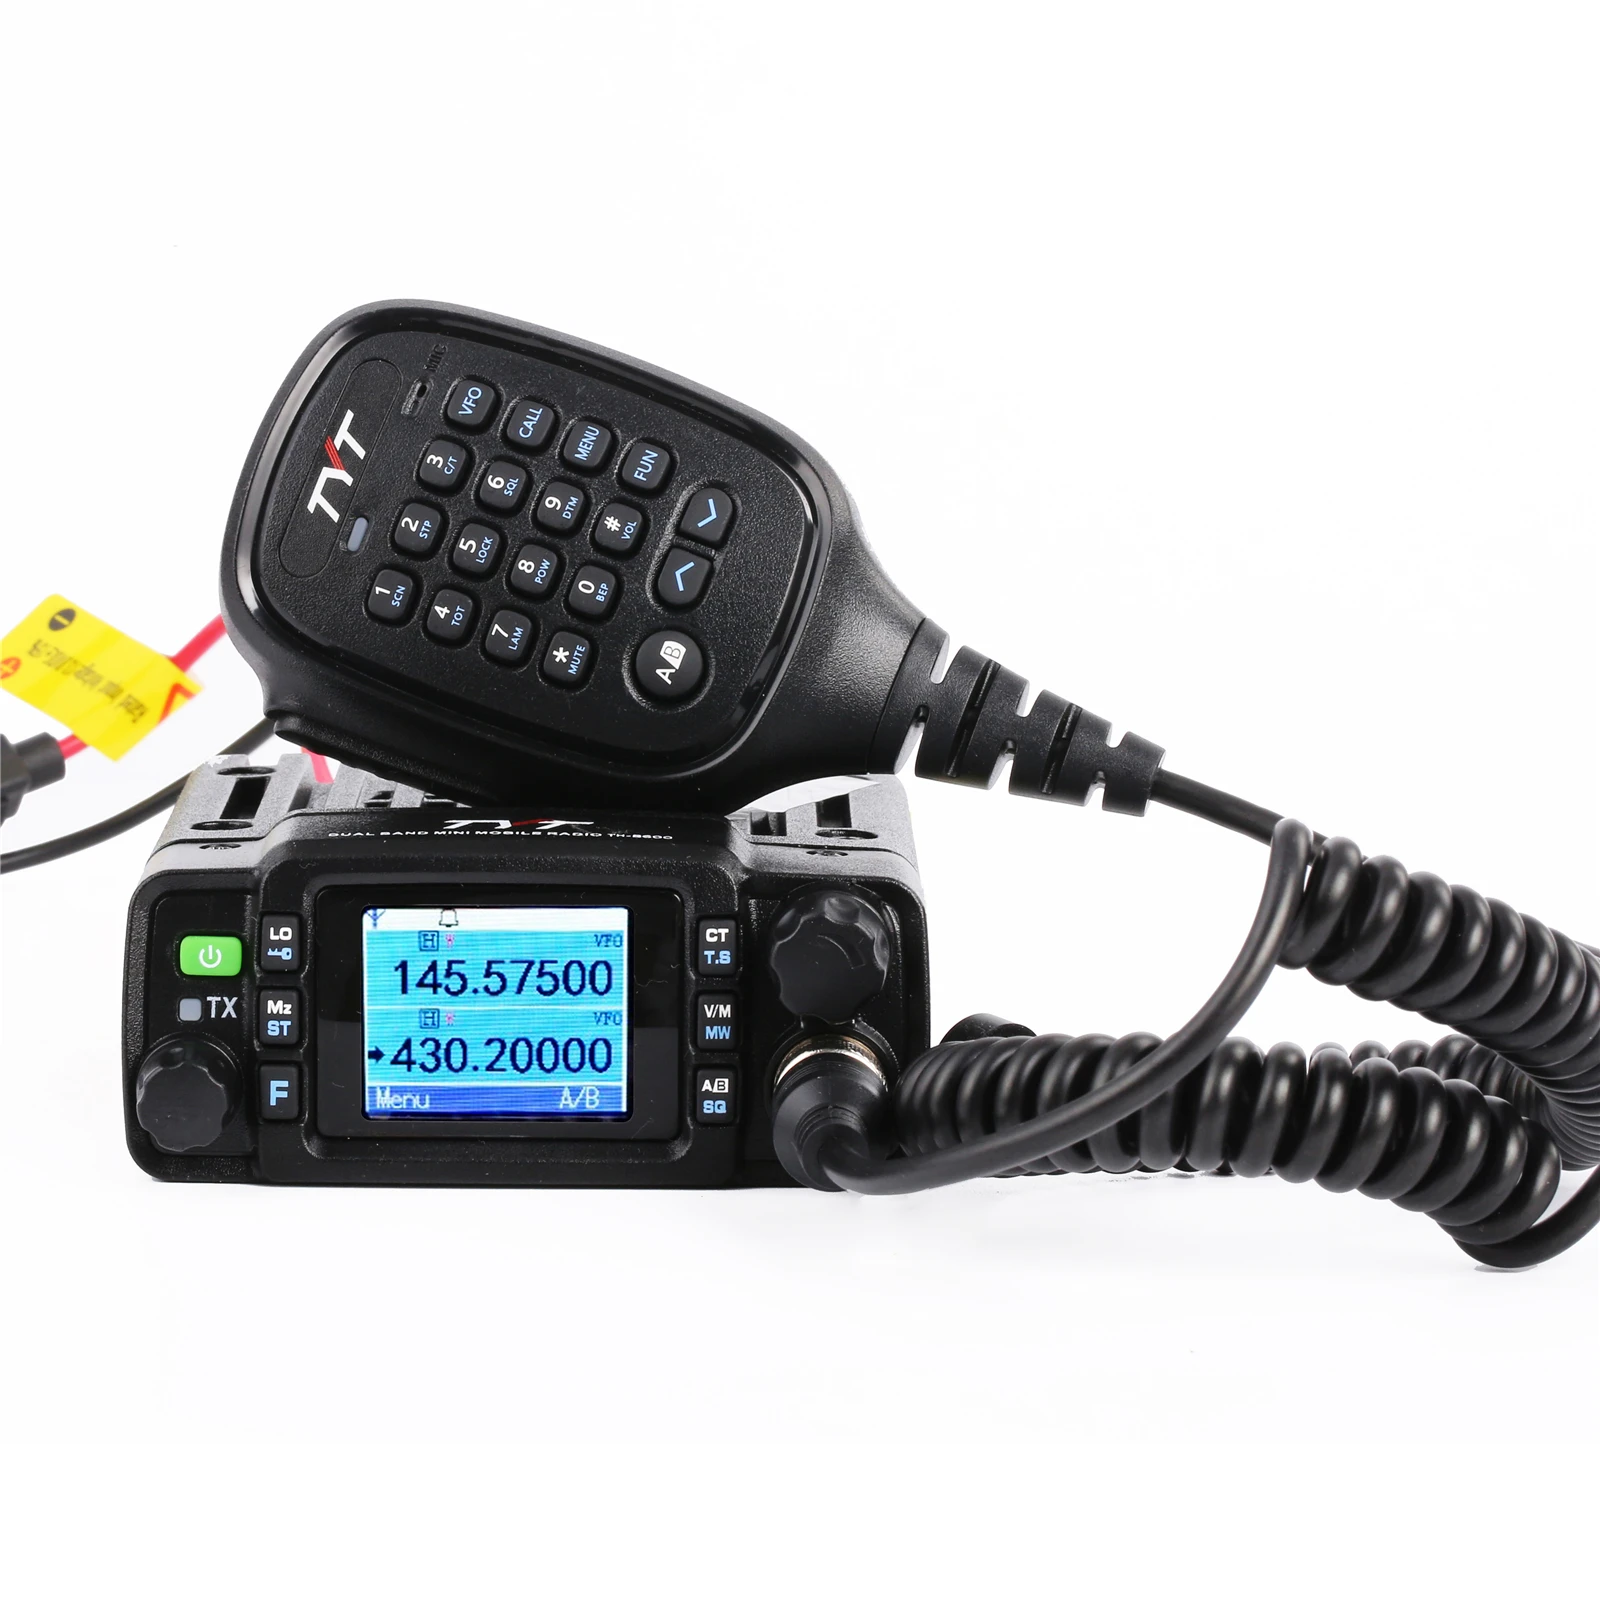 

TYT TH-8600 Mini 25 Watt Dual Band Base IP67 Waterproof Mini Car Radio Dual Band 144-148MHz/420-450MHz